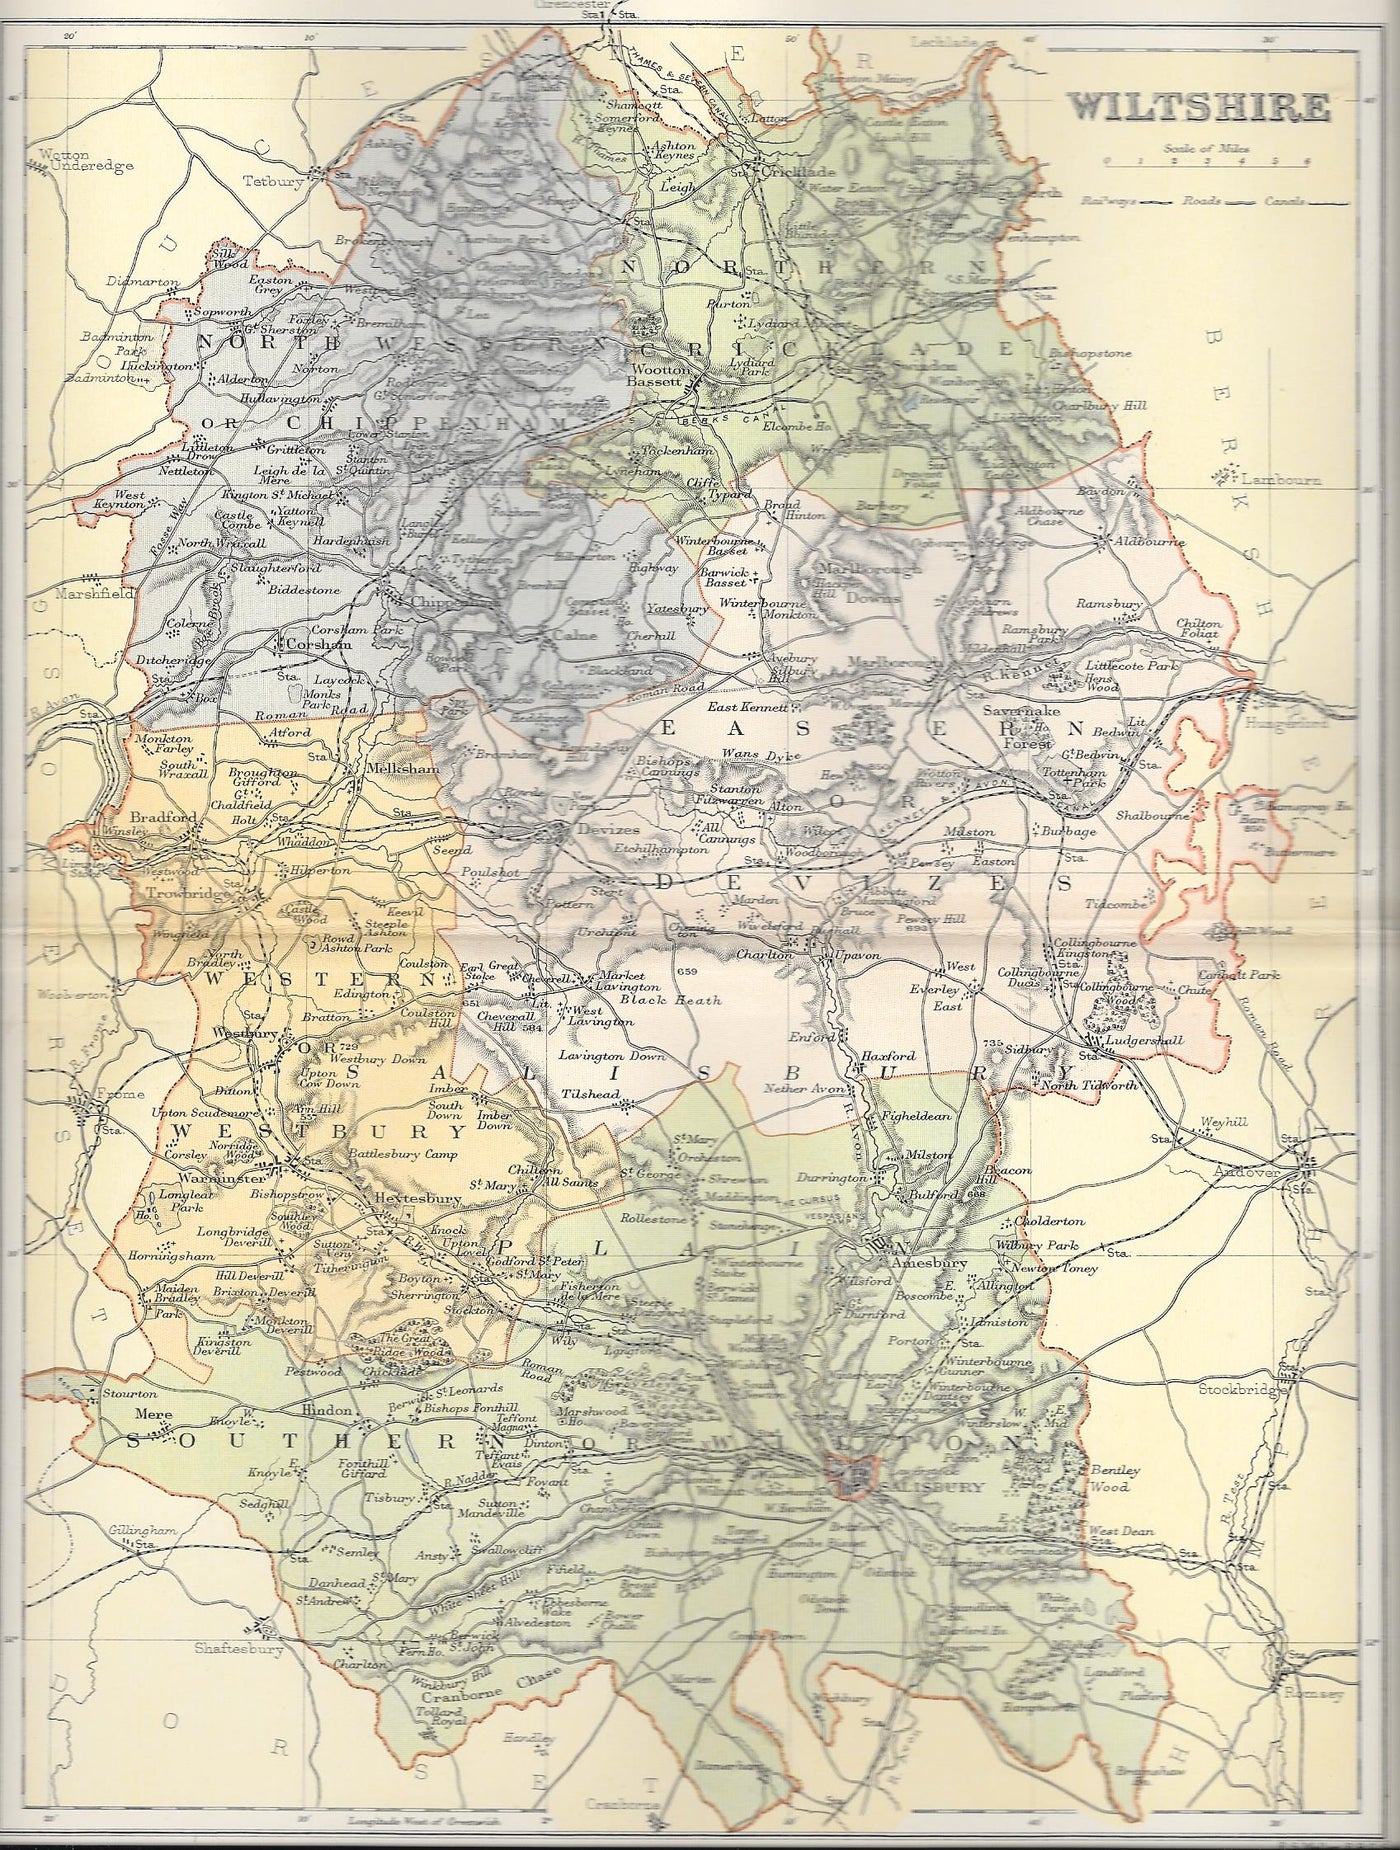 Wiltshire antique map published 1895